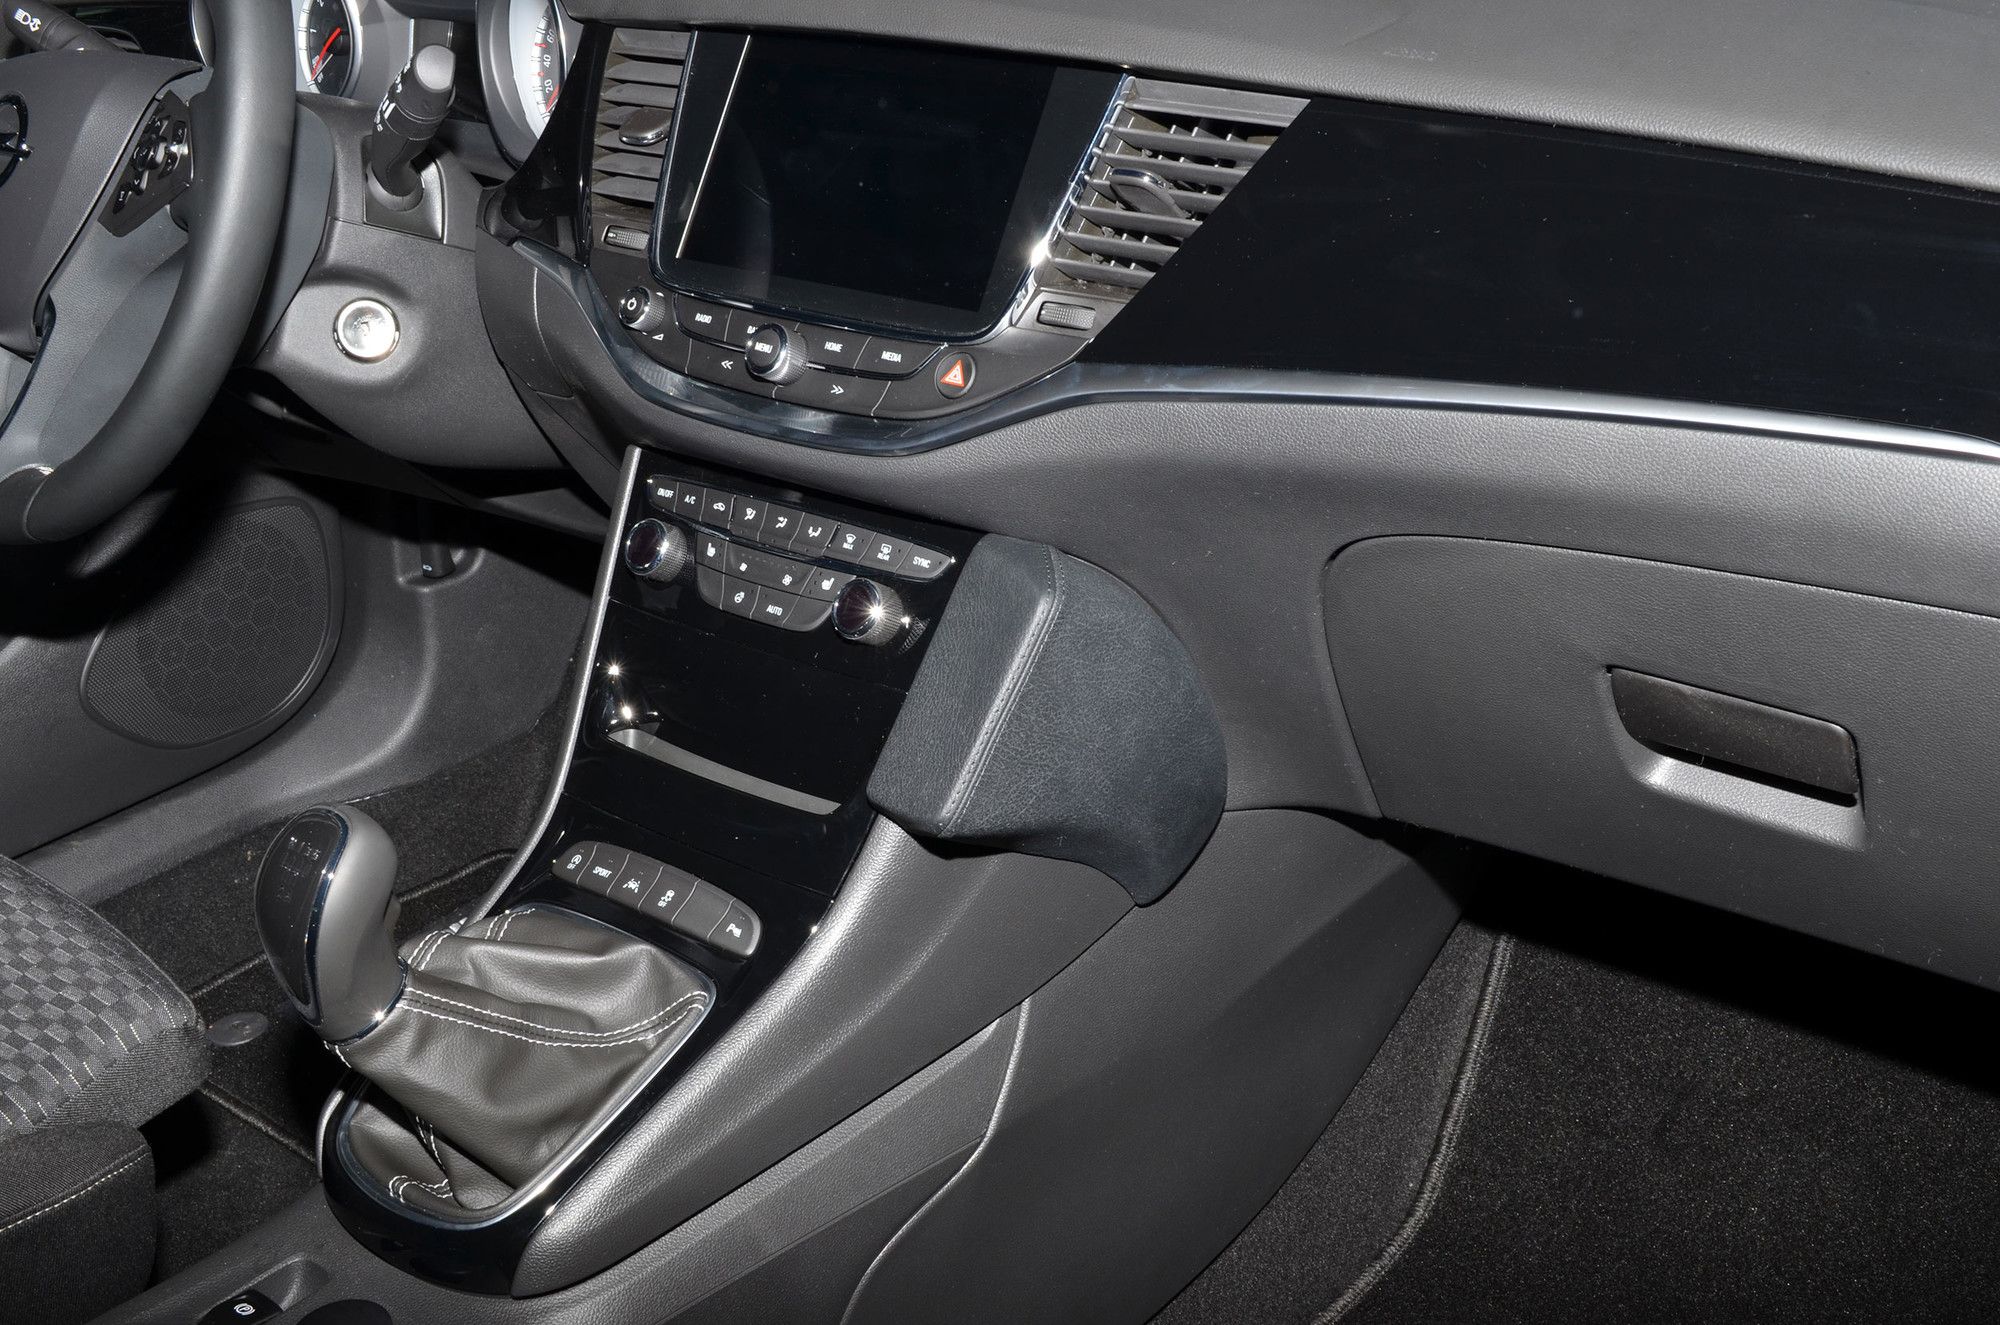 Kuda console Opel Astra K 2016- Zwart